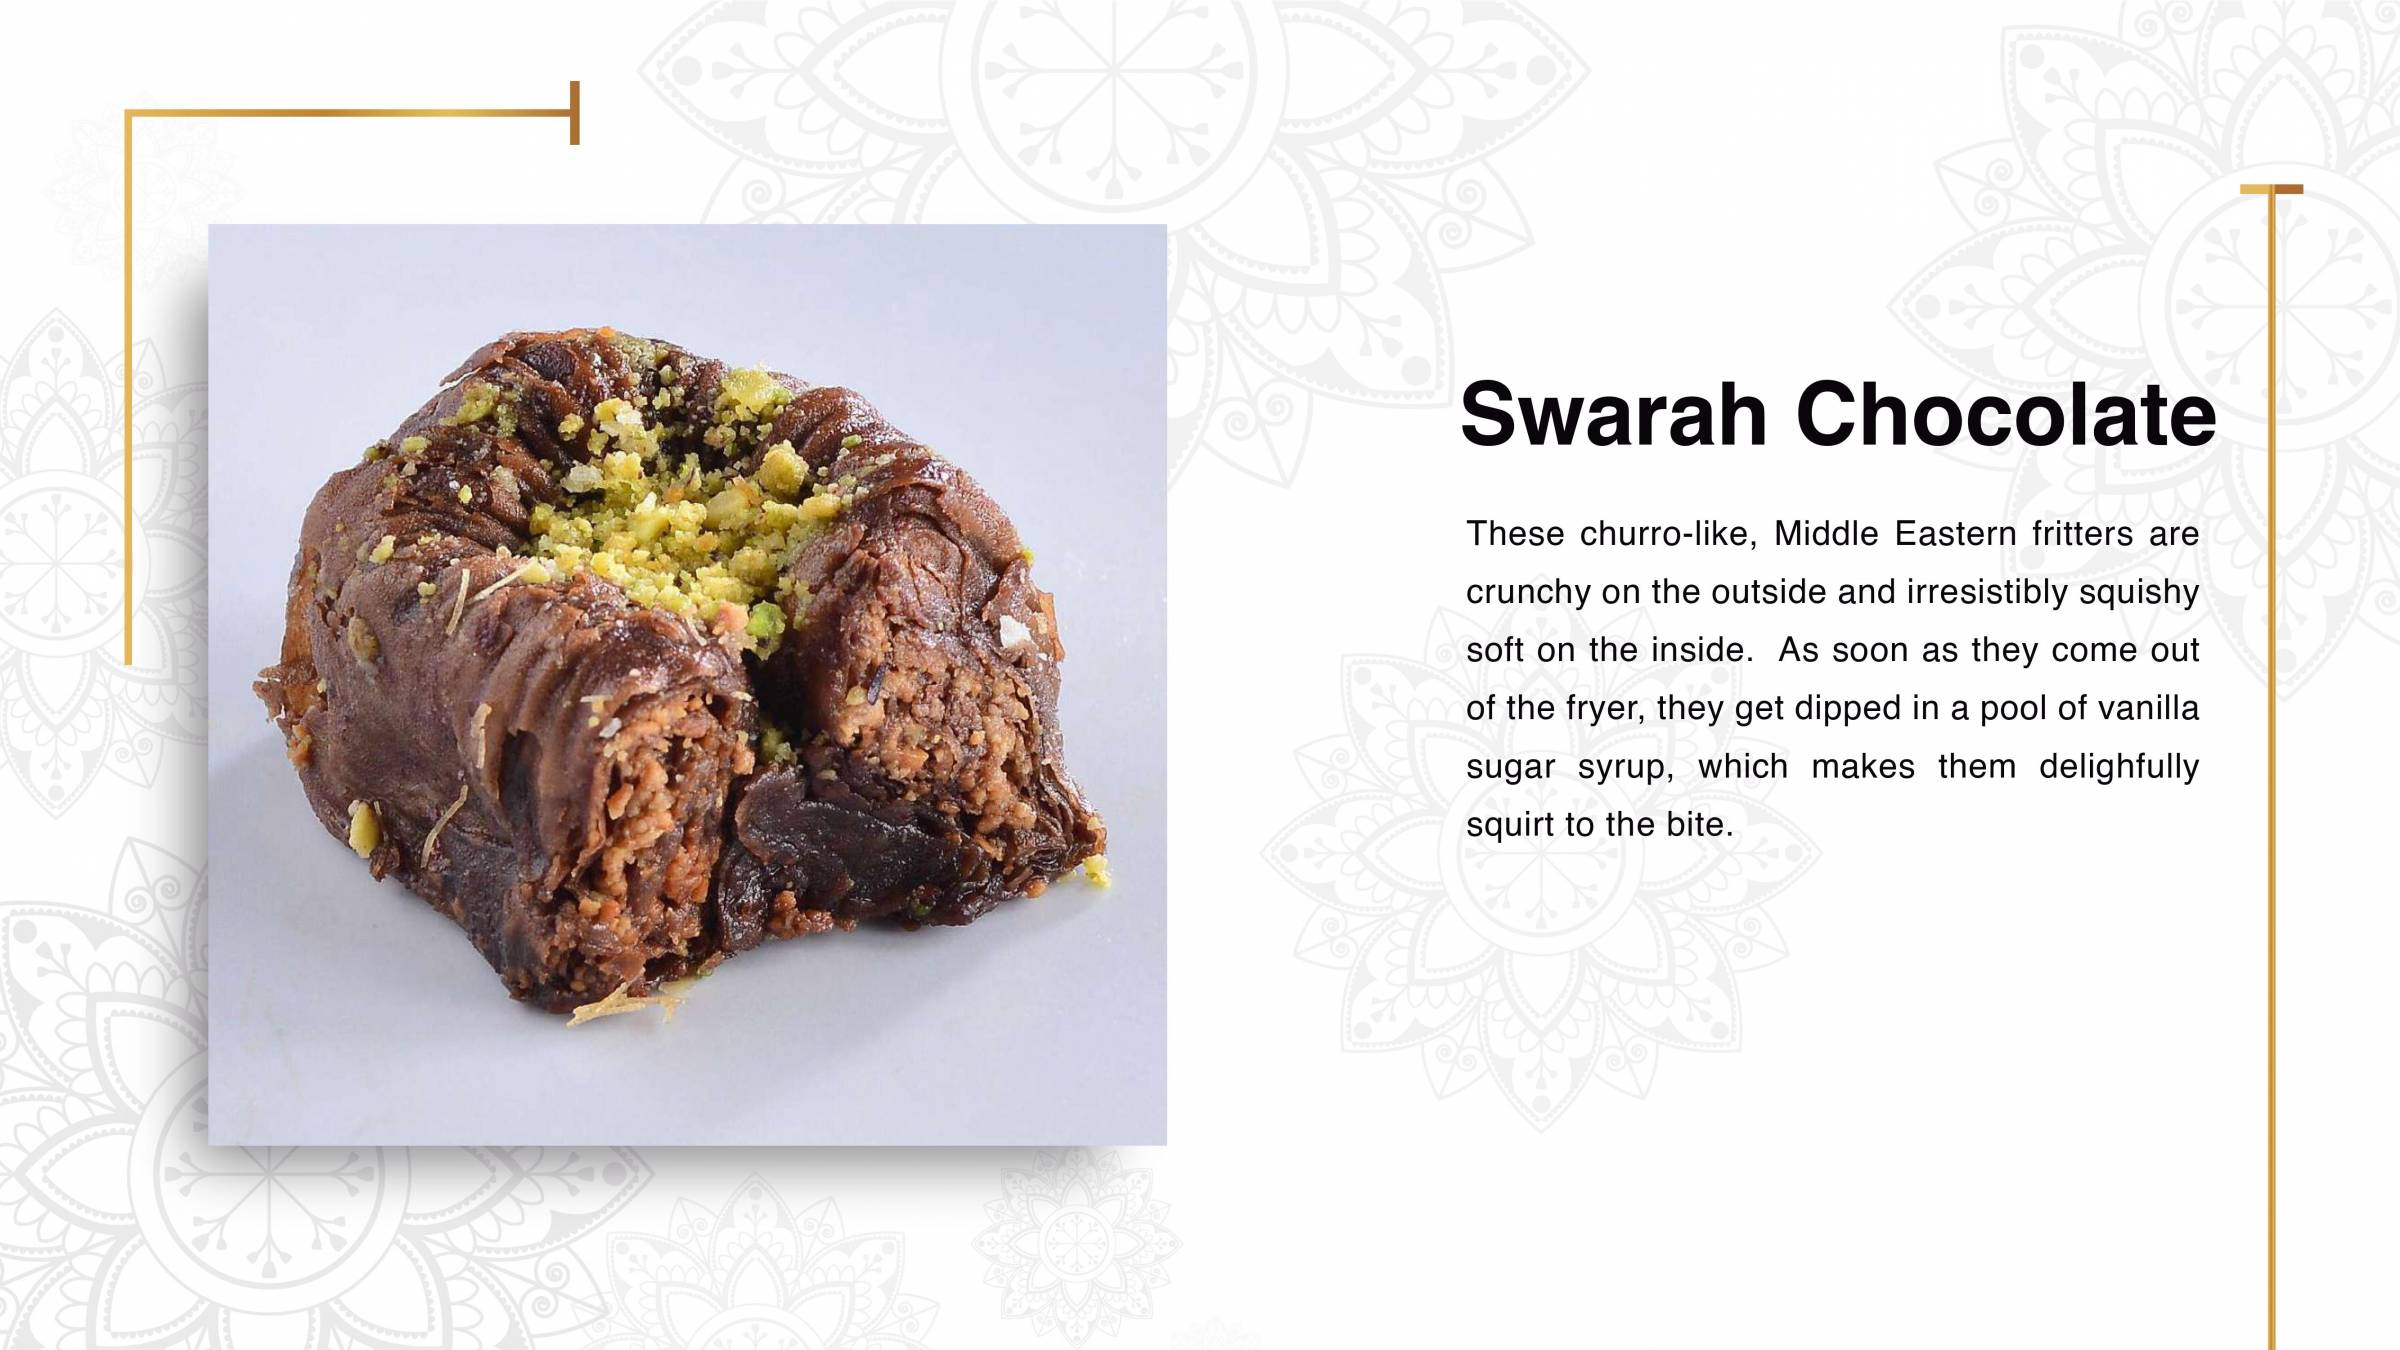 Swarah Chocolate